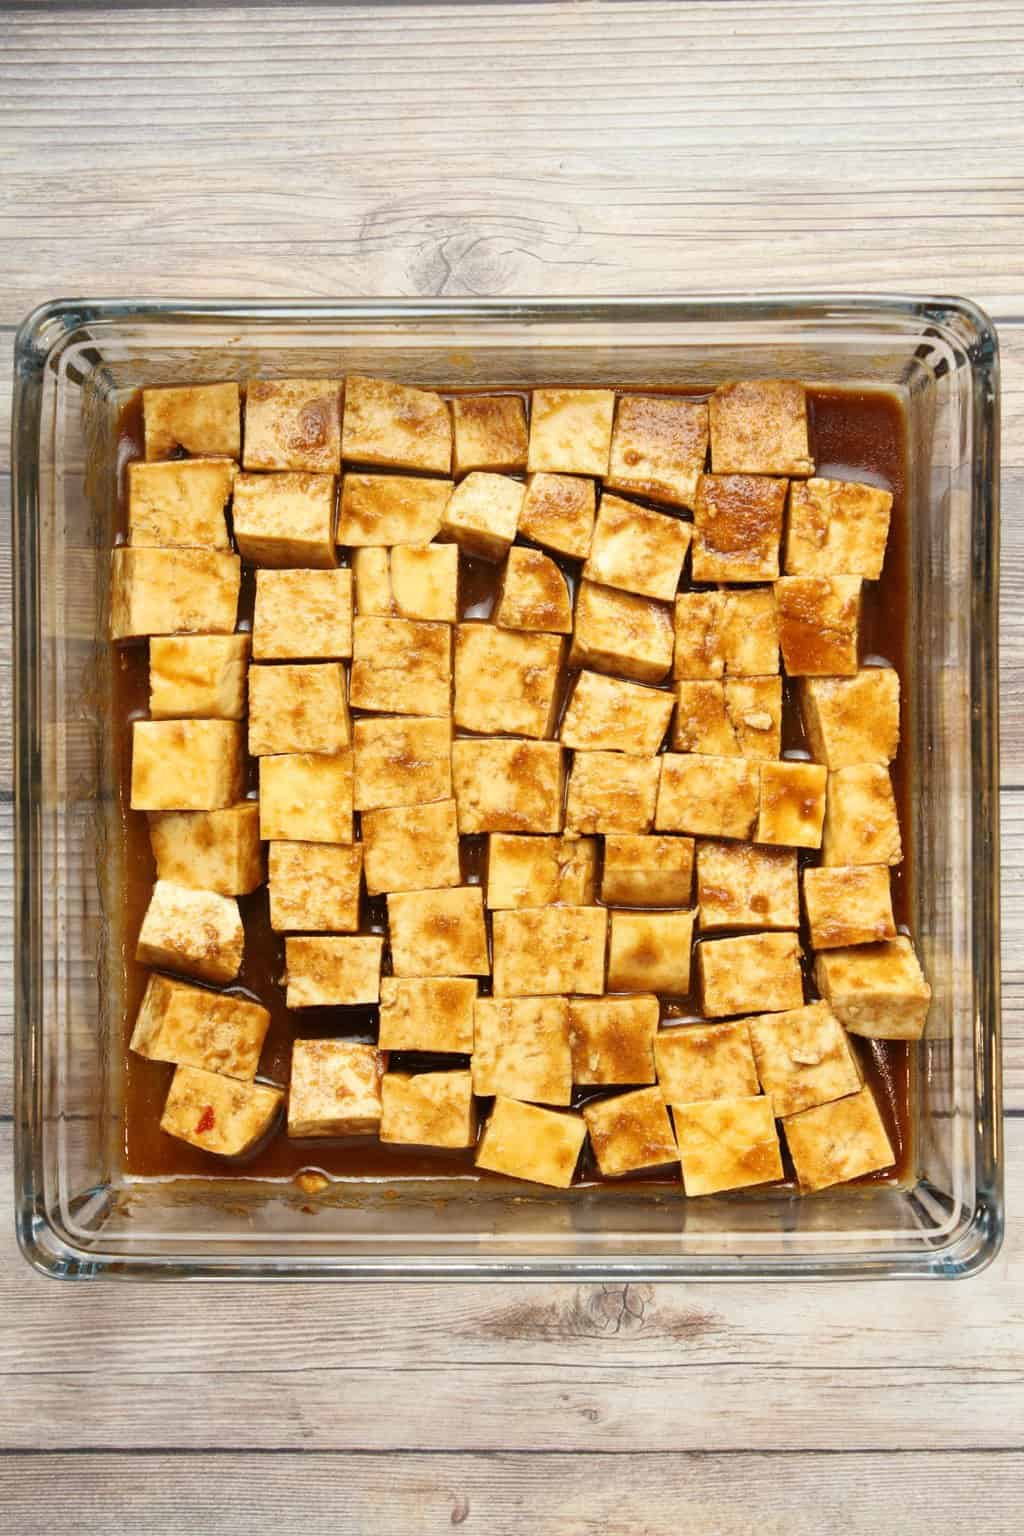 Cubes of tofu marinading in a tofu marinade sauce in a glass dish. 